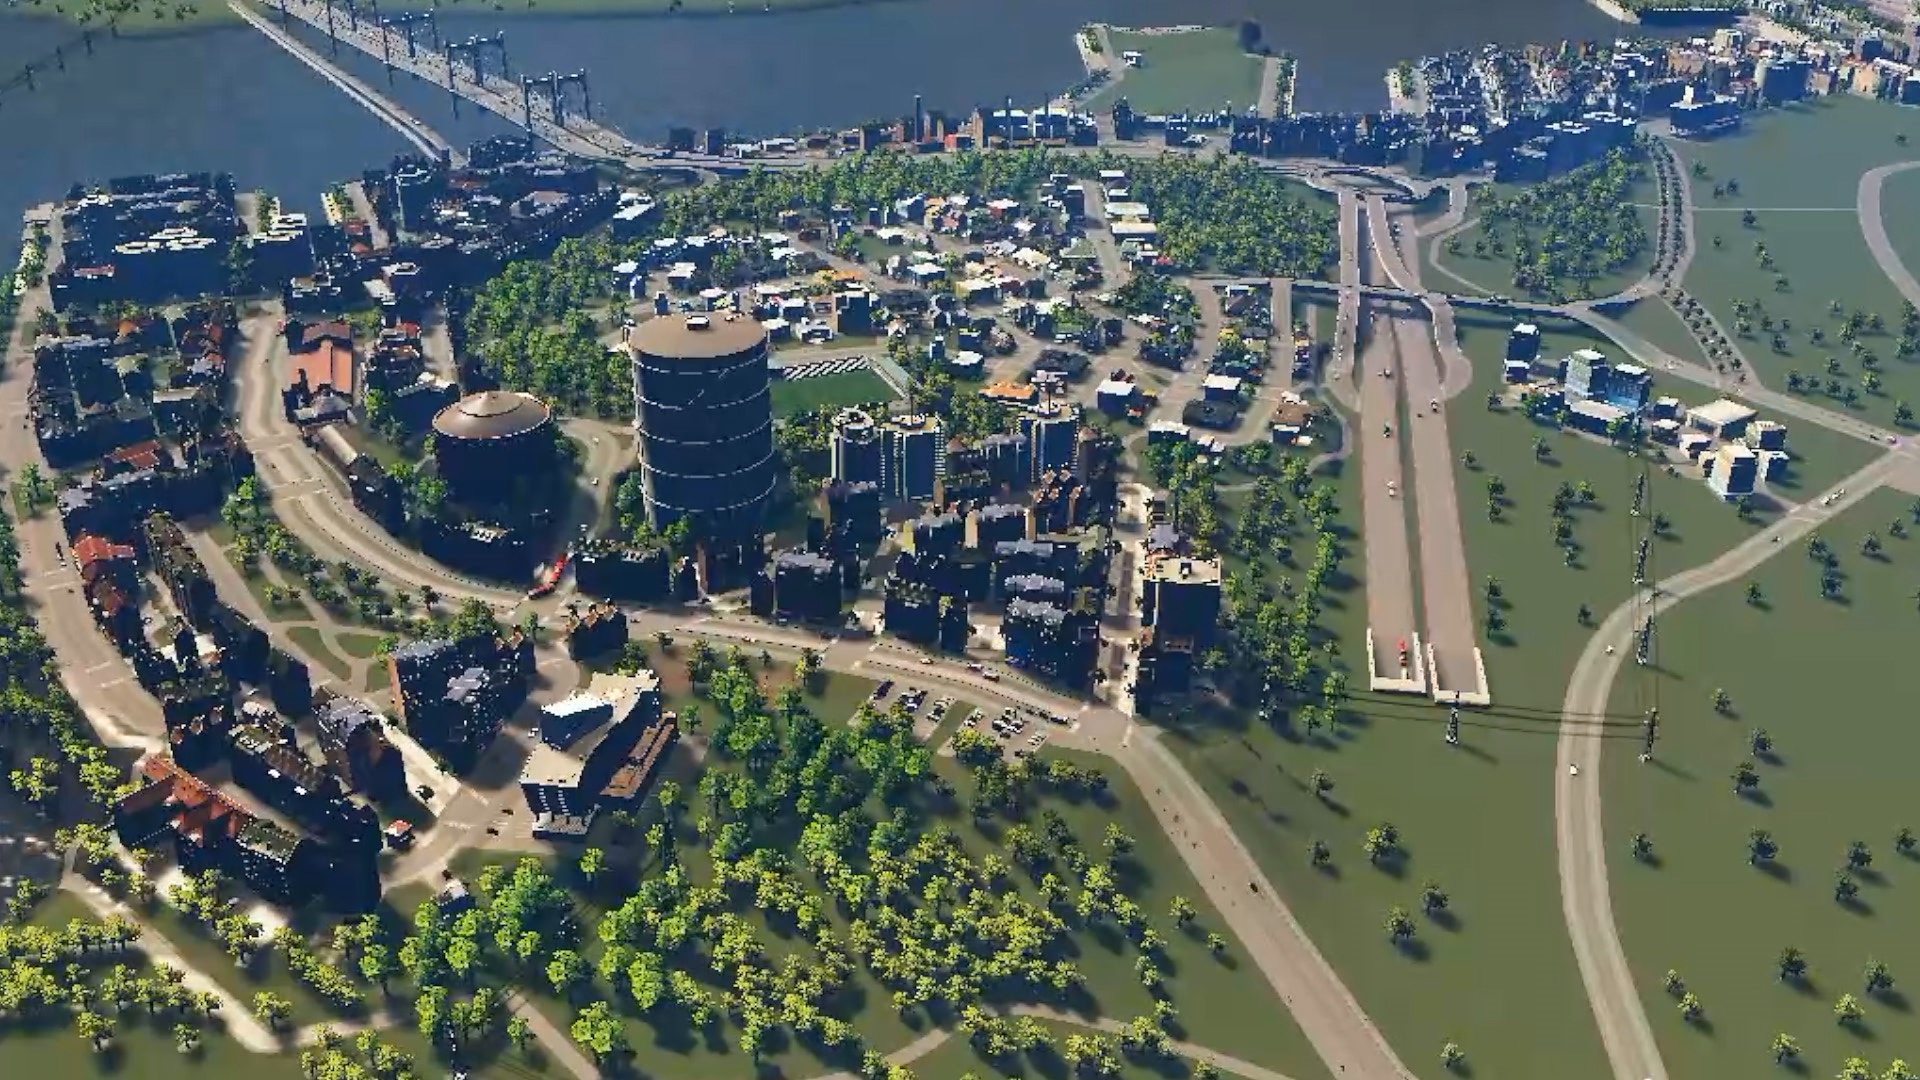 Video game Cities Skylines helps plan Stockholm development - BBC News